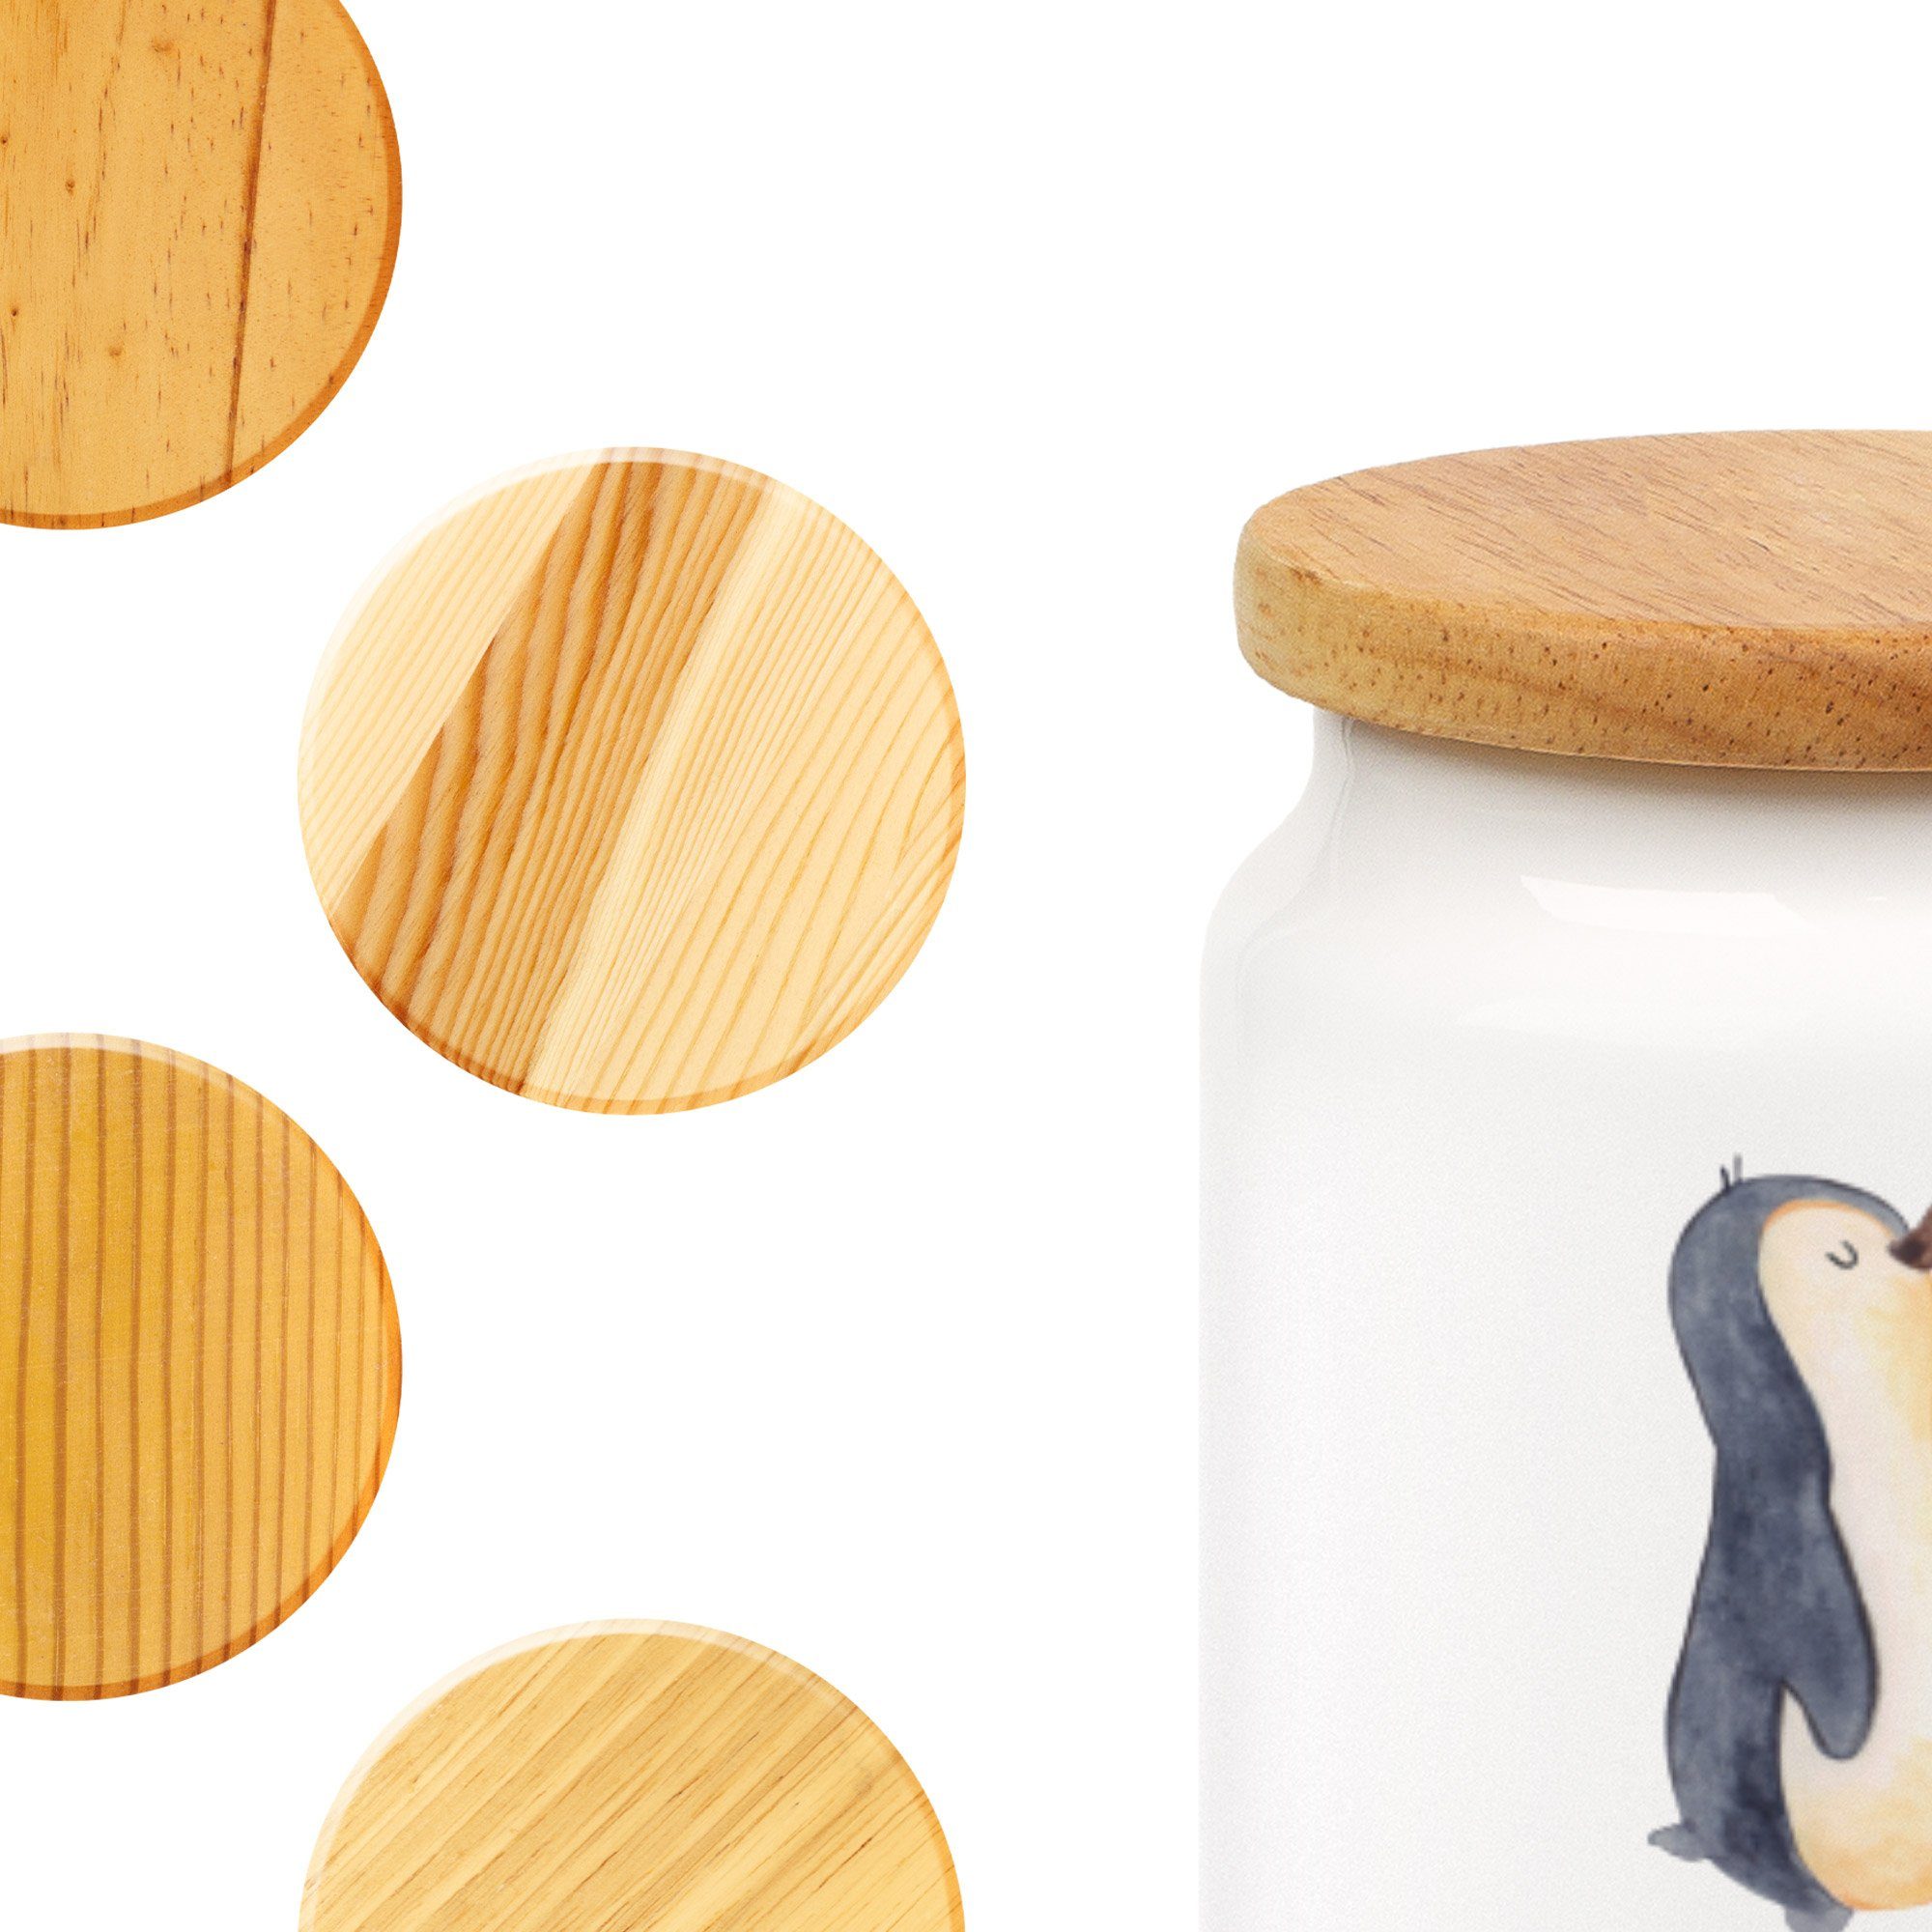 marschierend Vorratsdose - Keramik, Keksdose, Mr. Pinguin Mrs. Aufbew, Vorratsdose, - Geschenk, (1-tlg) Panda Weiß &